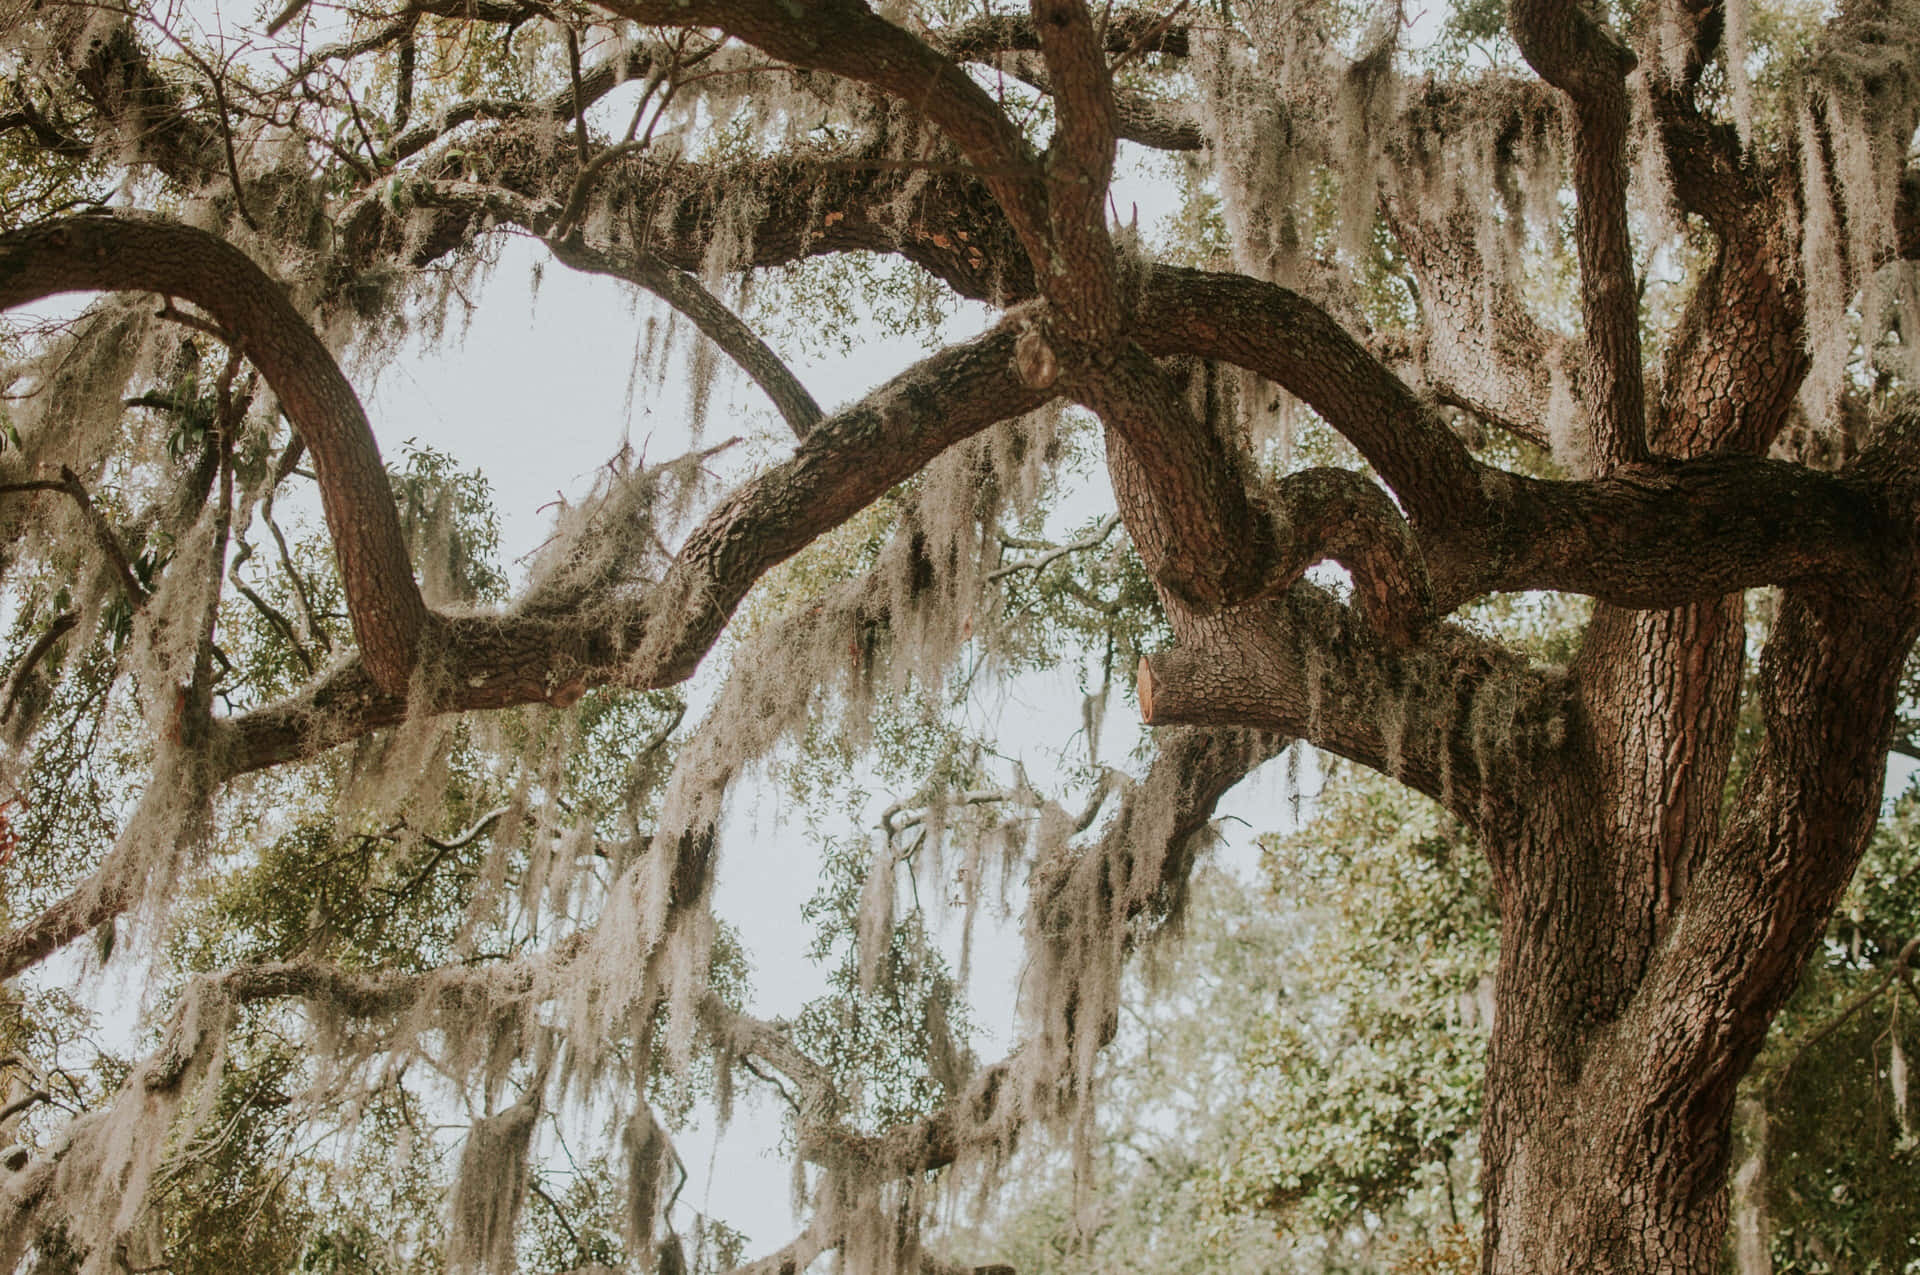 "Majestic Live Oak Trees Facing River in Savannah Georgia"